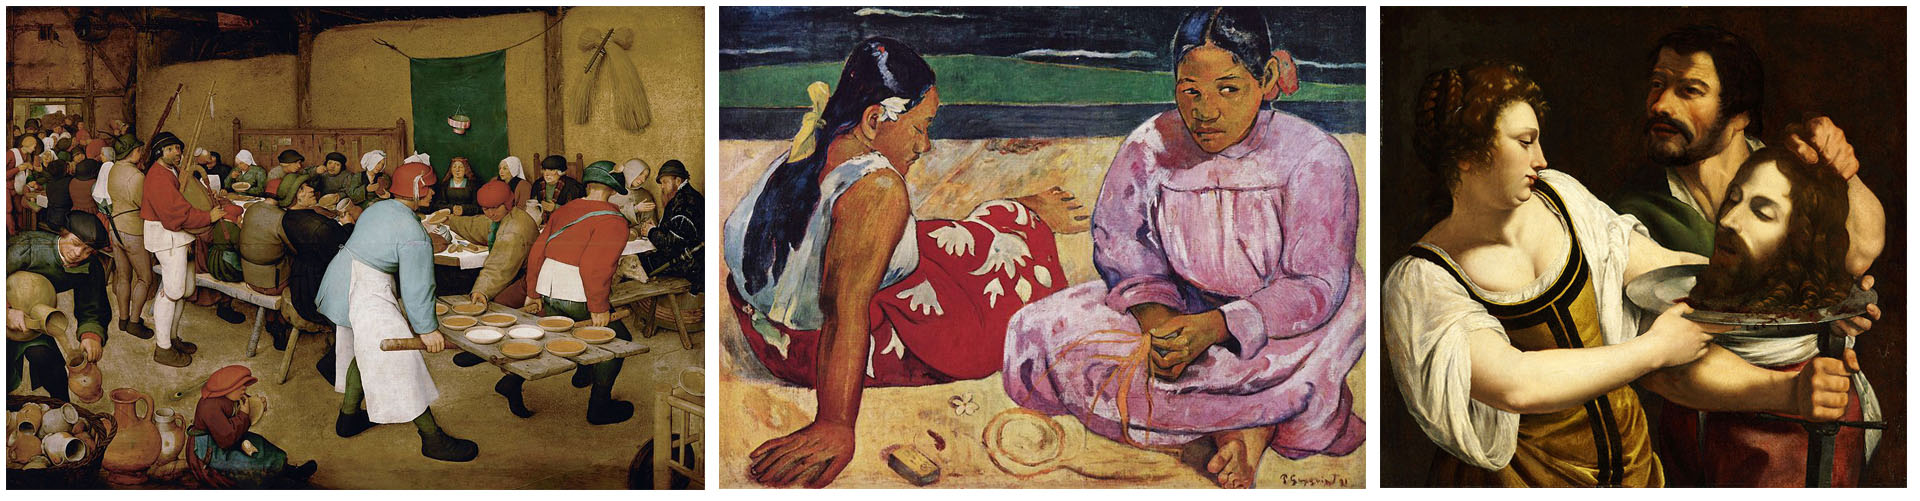 GauguinBrueghelyArtemisia